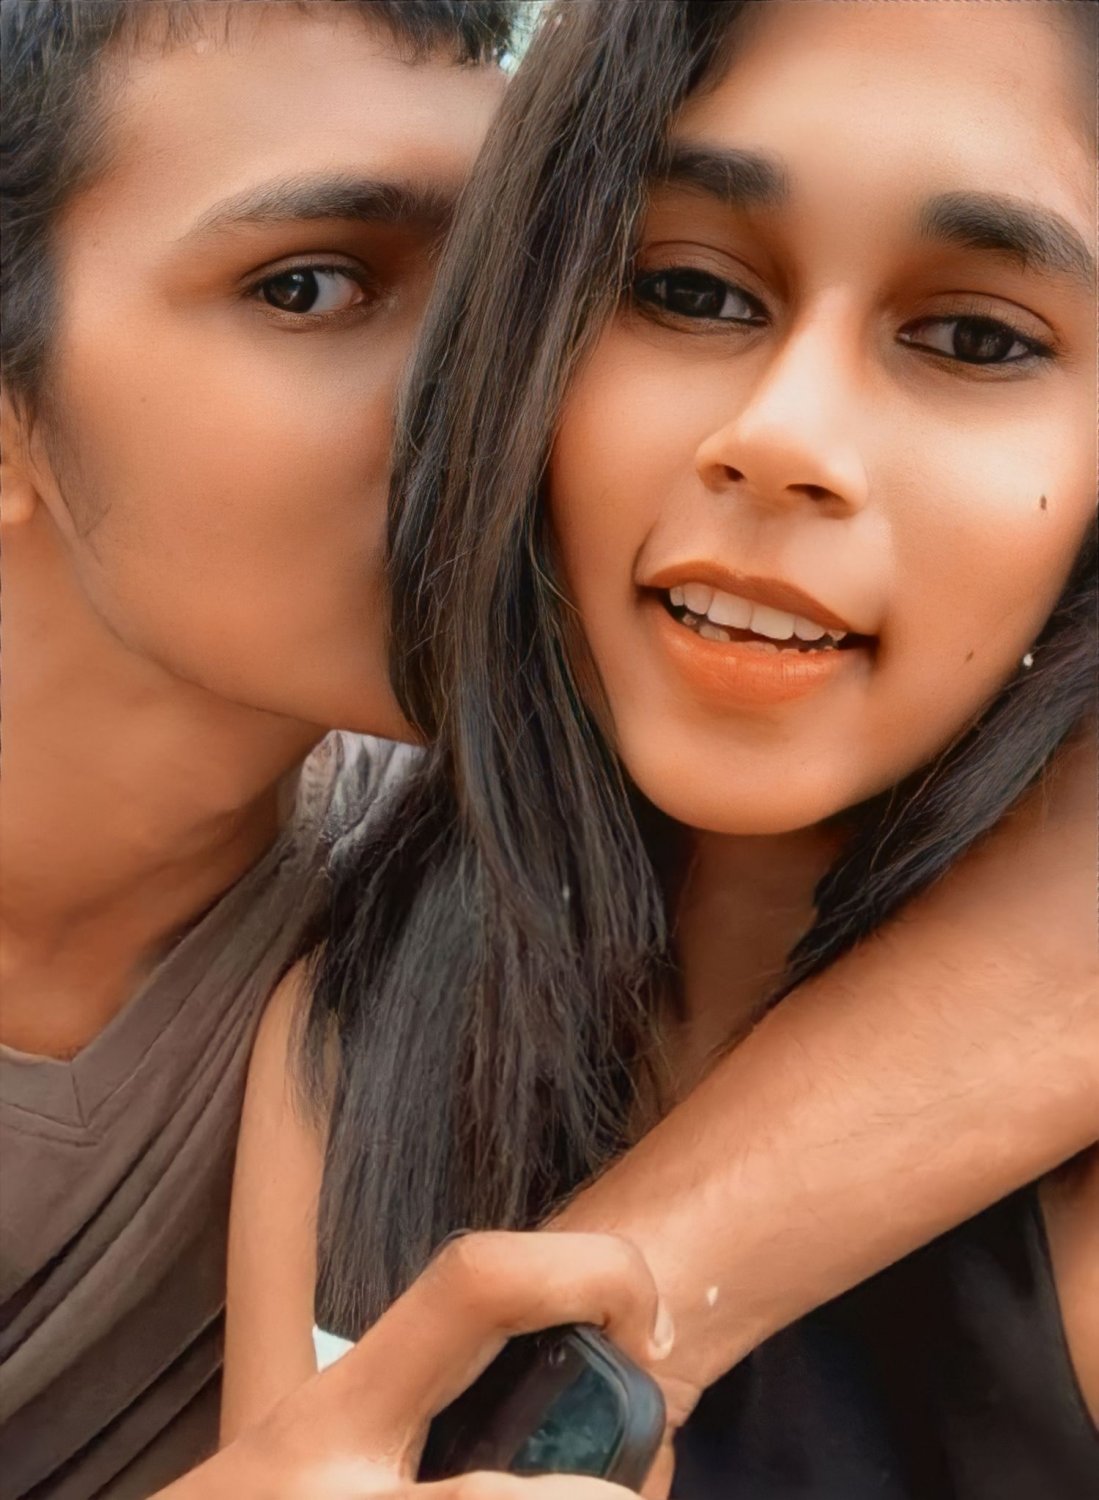 Horney Indian Girlfriend Having Fun with Boyfriend Videos photo photo picture